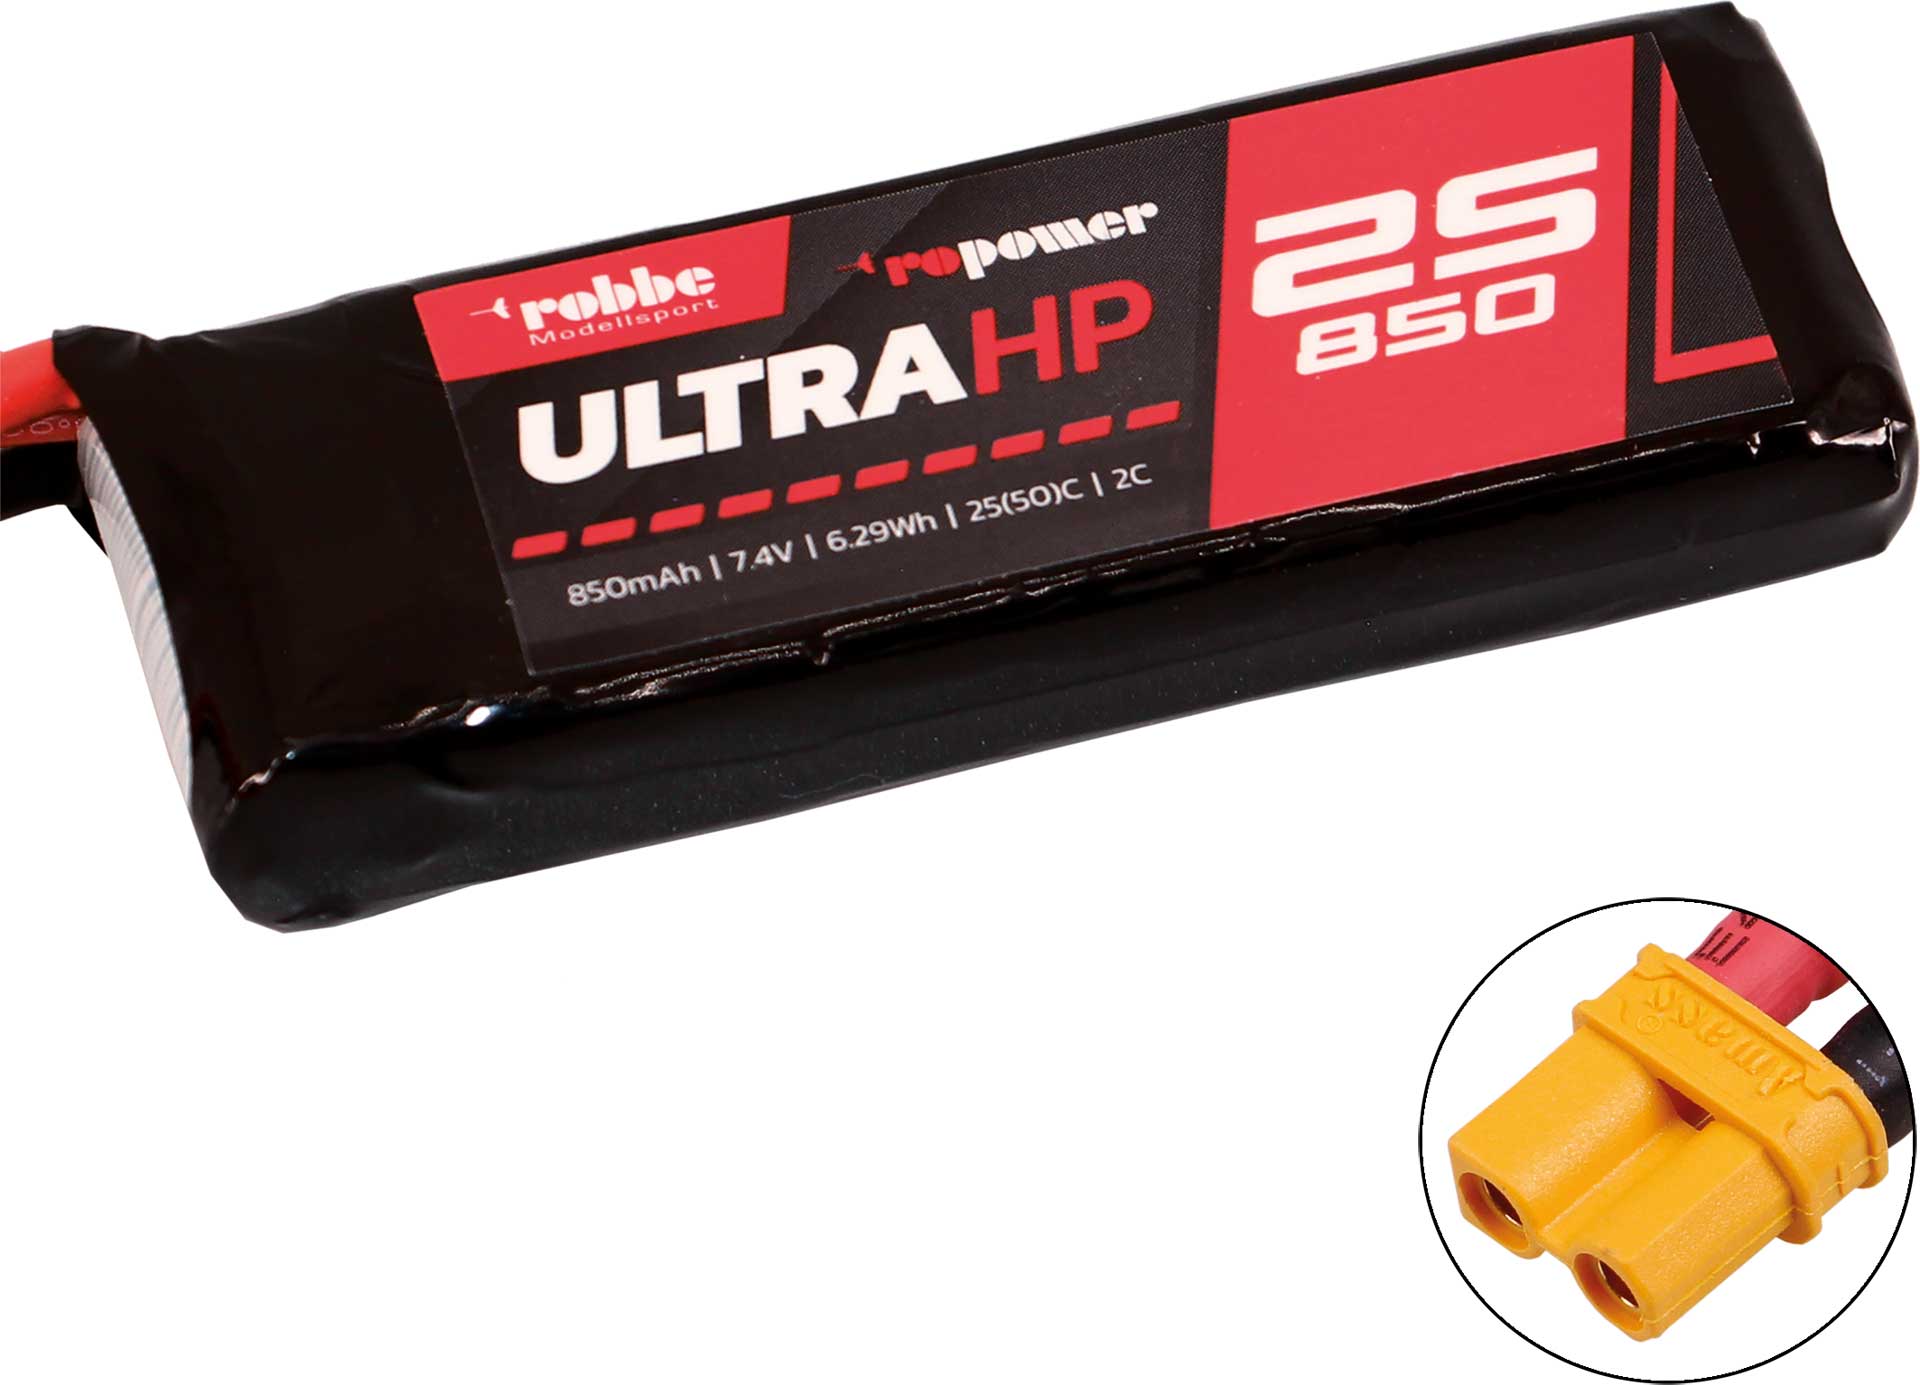 Robbe Modellsport RO-POWER ULTRA HP 850MAH 7,4 VOLT 2S Batterie Lipo